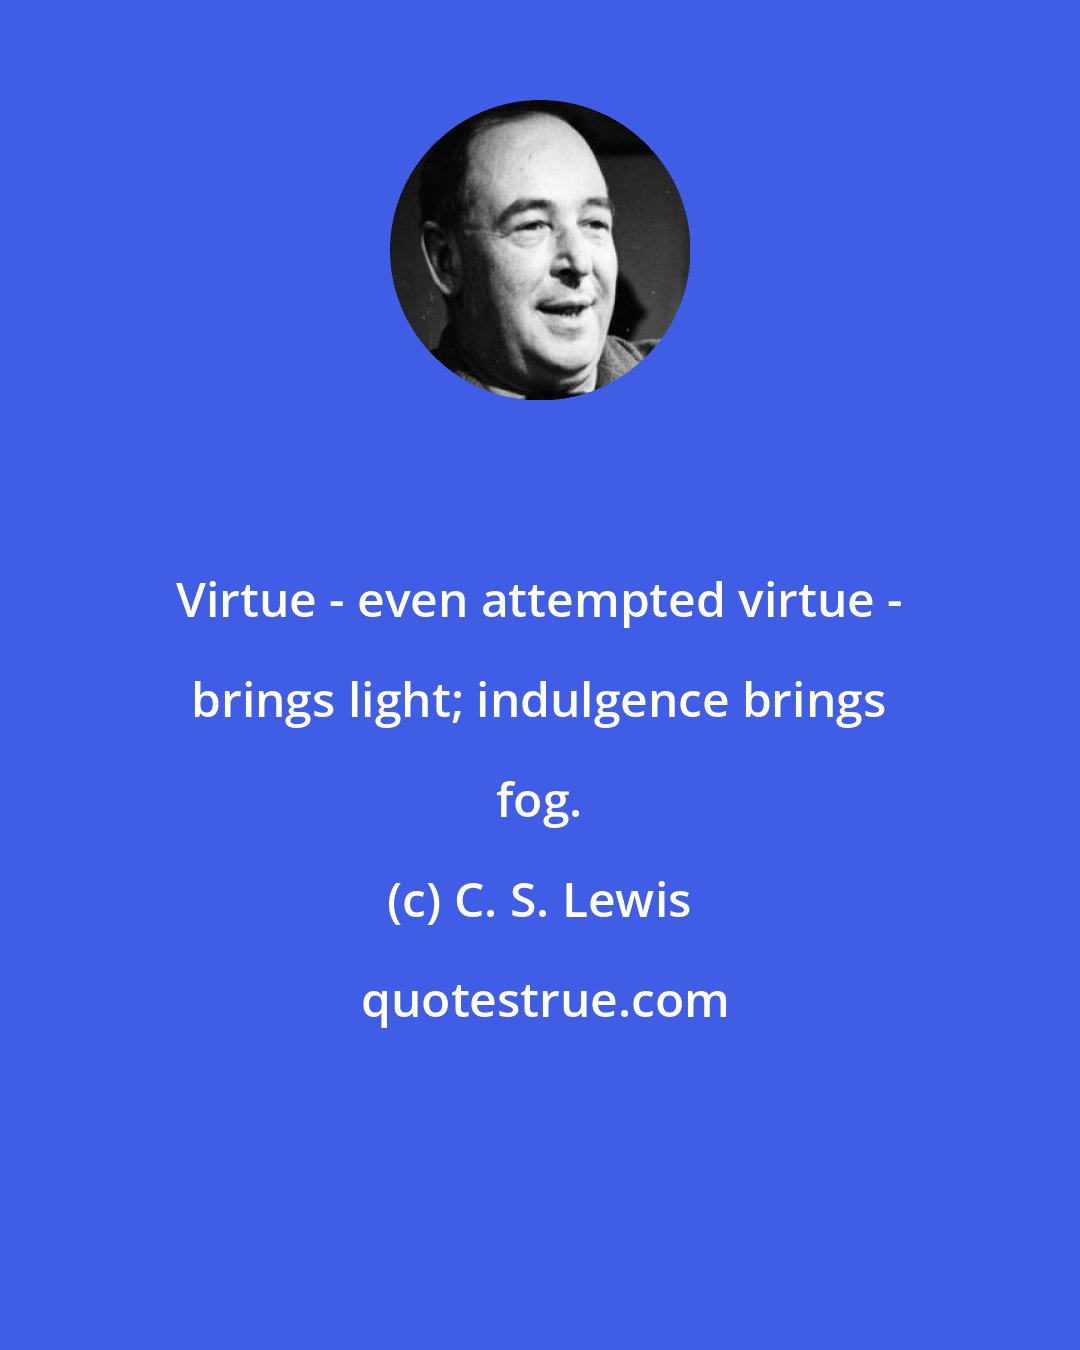 C. S. Lewis: Virtue - even attempted virtue - brings light; indulgence brings fog.